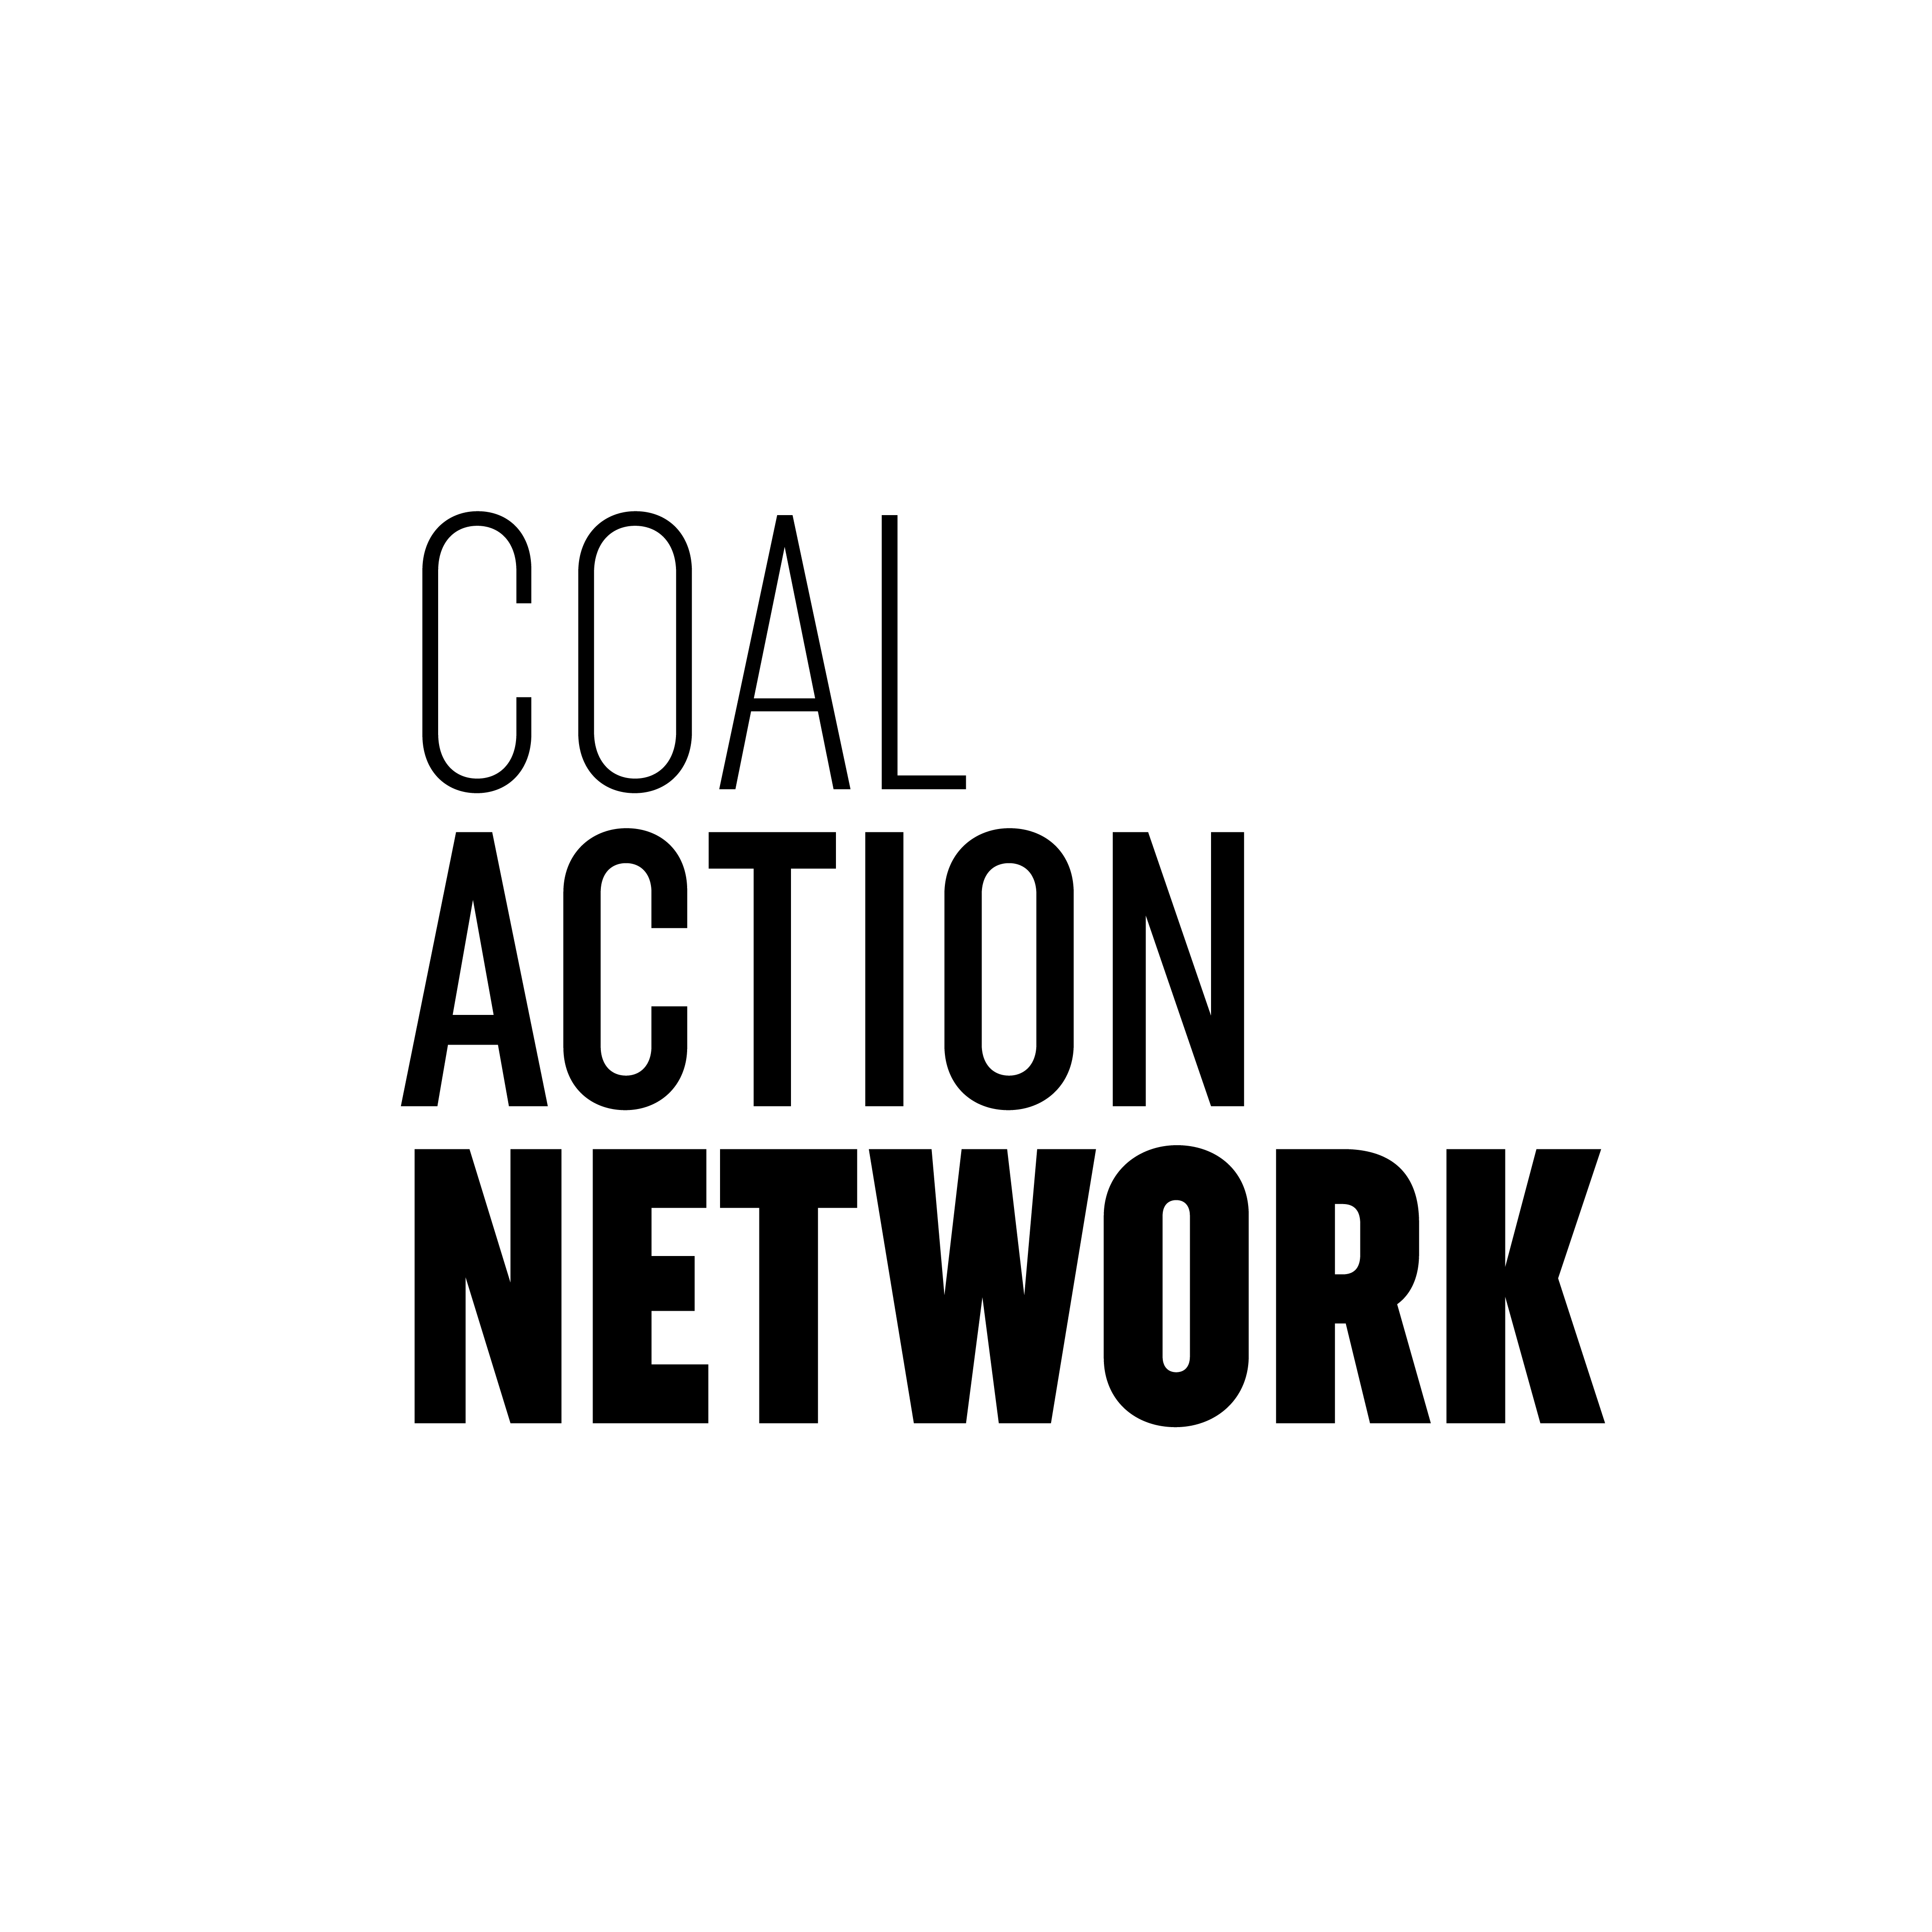 Coal Action Network